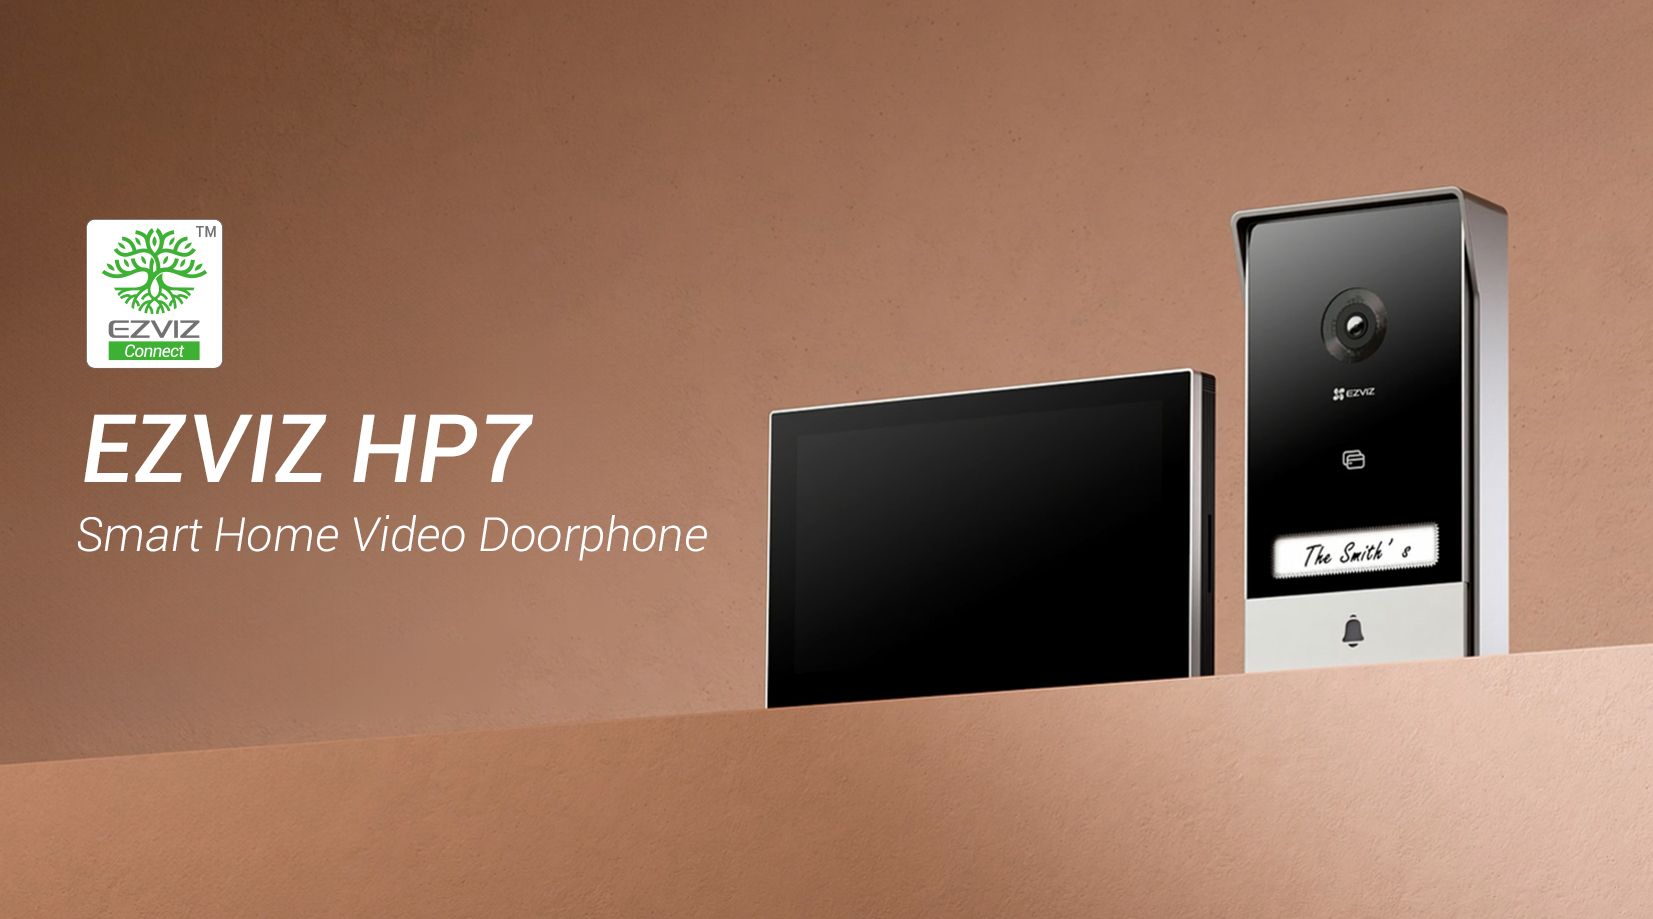 EZVIZ Brings HP7 smart home video doorbell on the stage